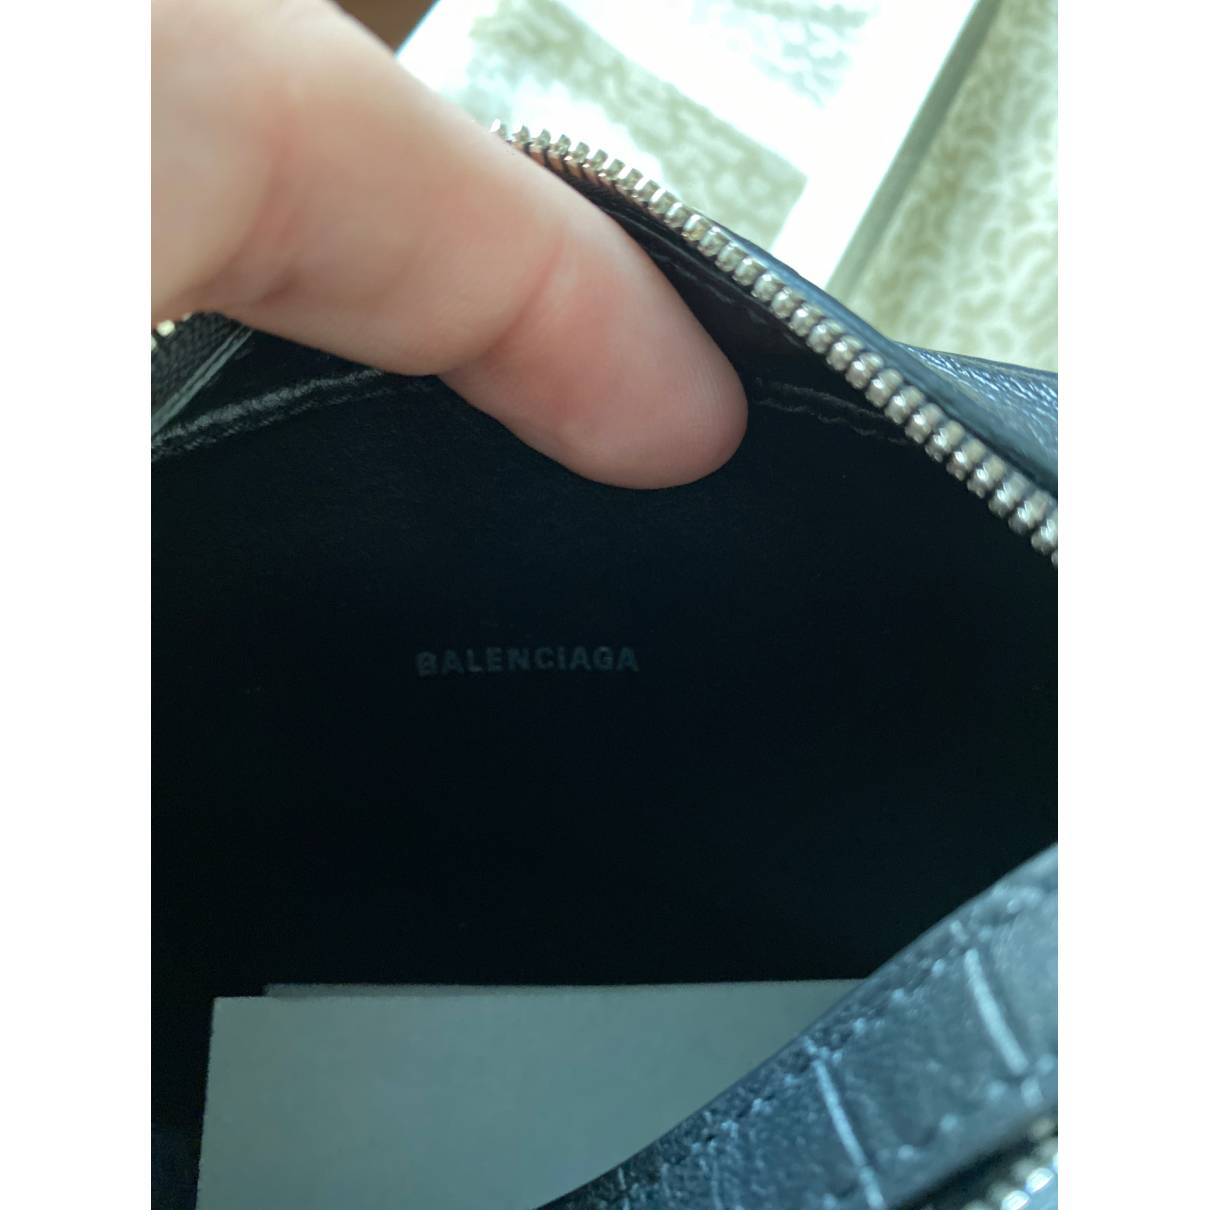 Buy Balenciaga Everyday leather handbag online